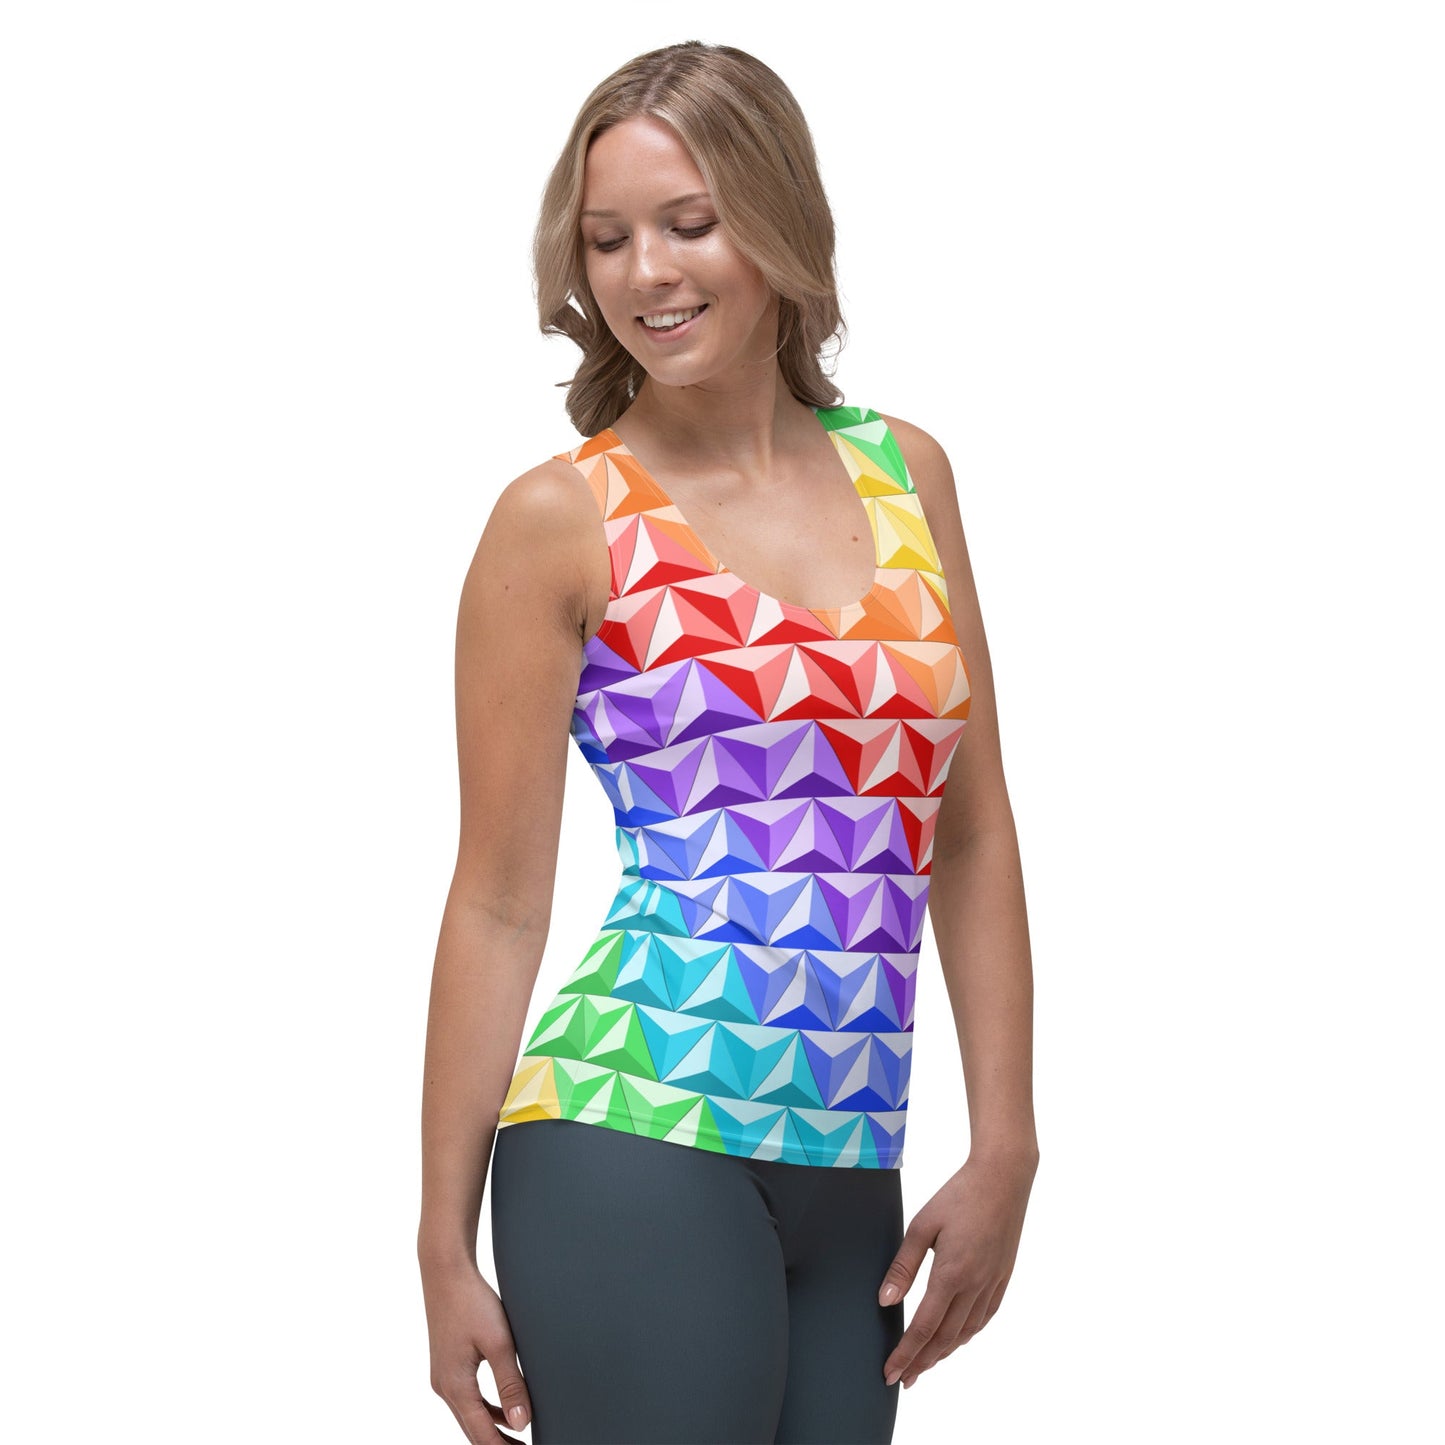 Rainbow World of Tomorrow Tank Top active wearcalifornia adventureclothing#tag4##tag5##tag6#